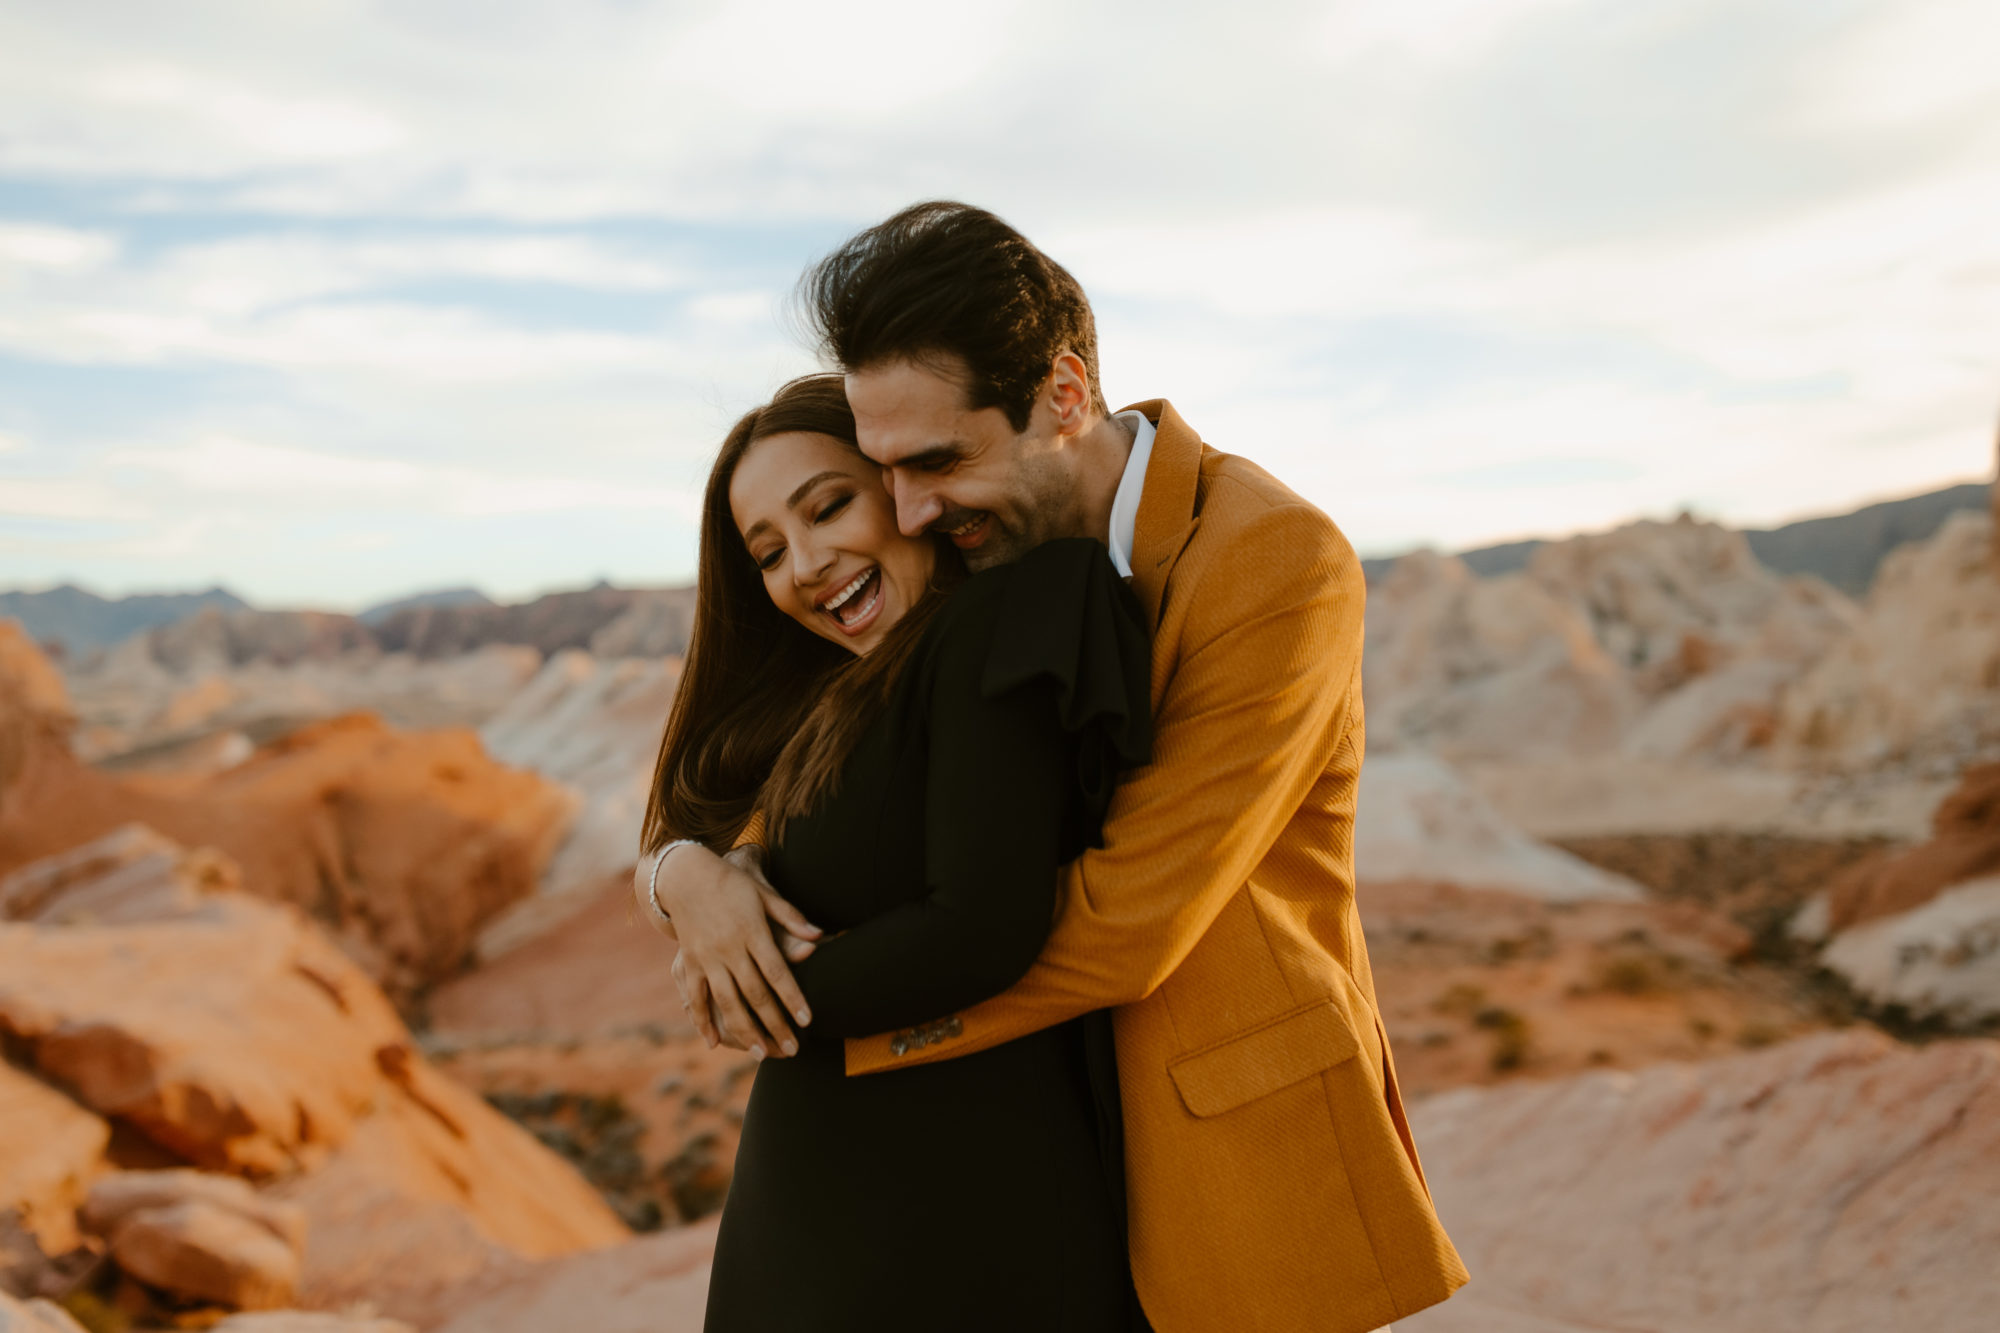 Couple posing for adventurous desert photoshoot in Nevada